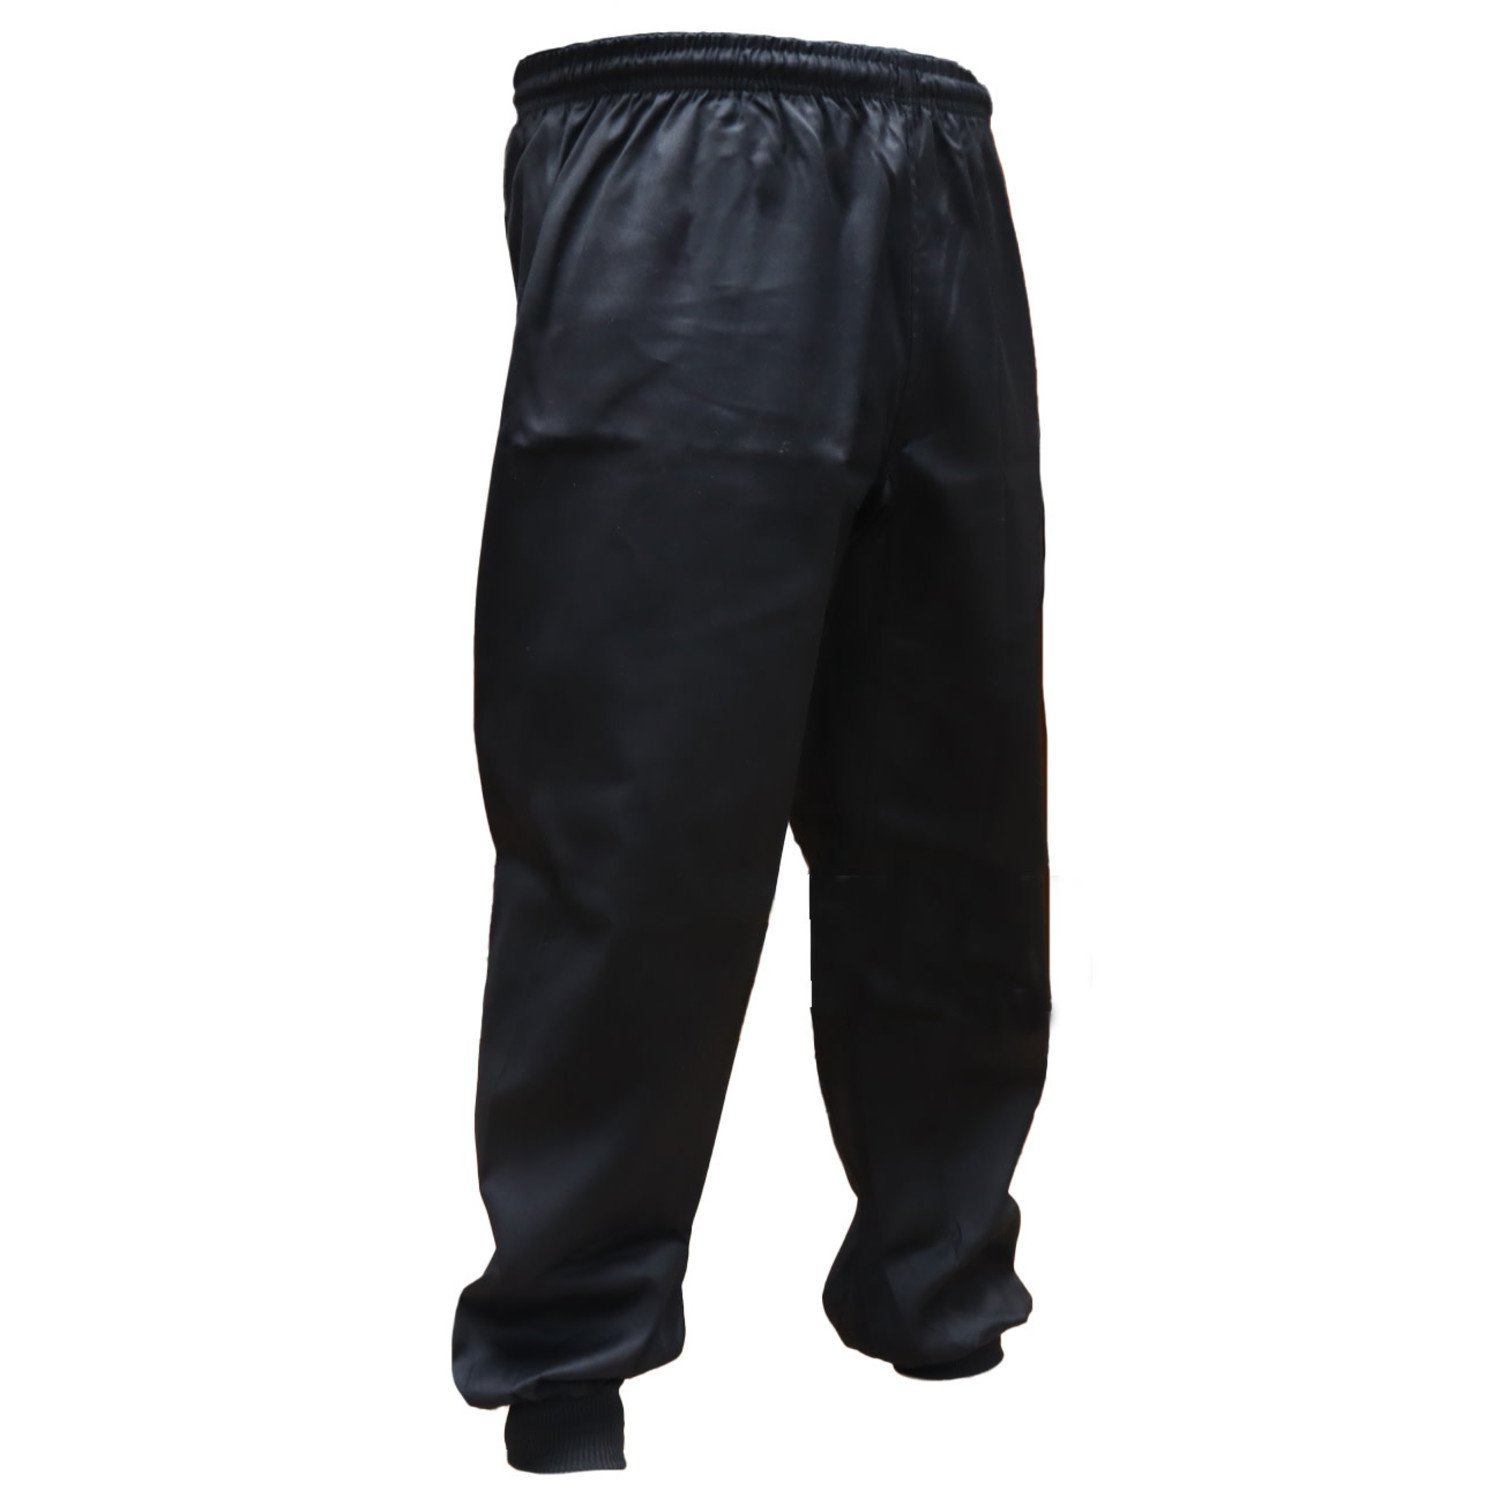 Tinymori Taichi Lantern Pants Tai Chi Training Pants | Kung Fu Taichi  Practice Uniforms Martial Arts Clothing Bottoms Cotton Large